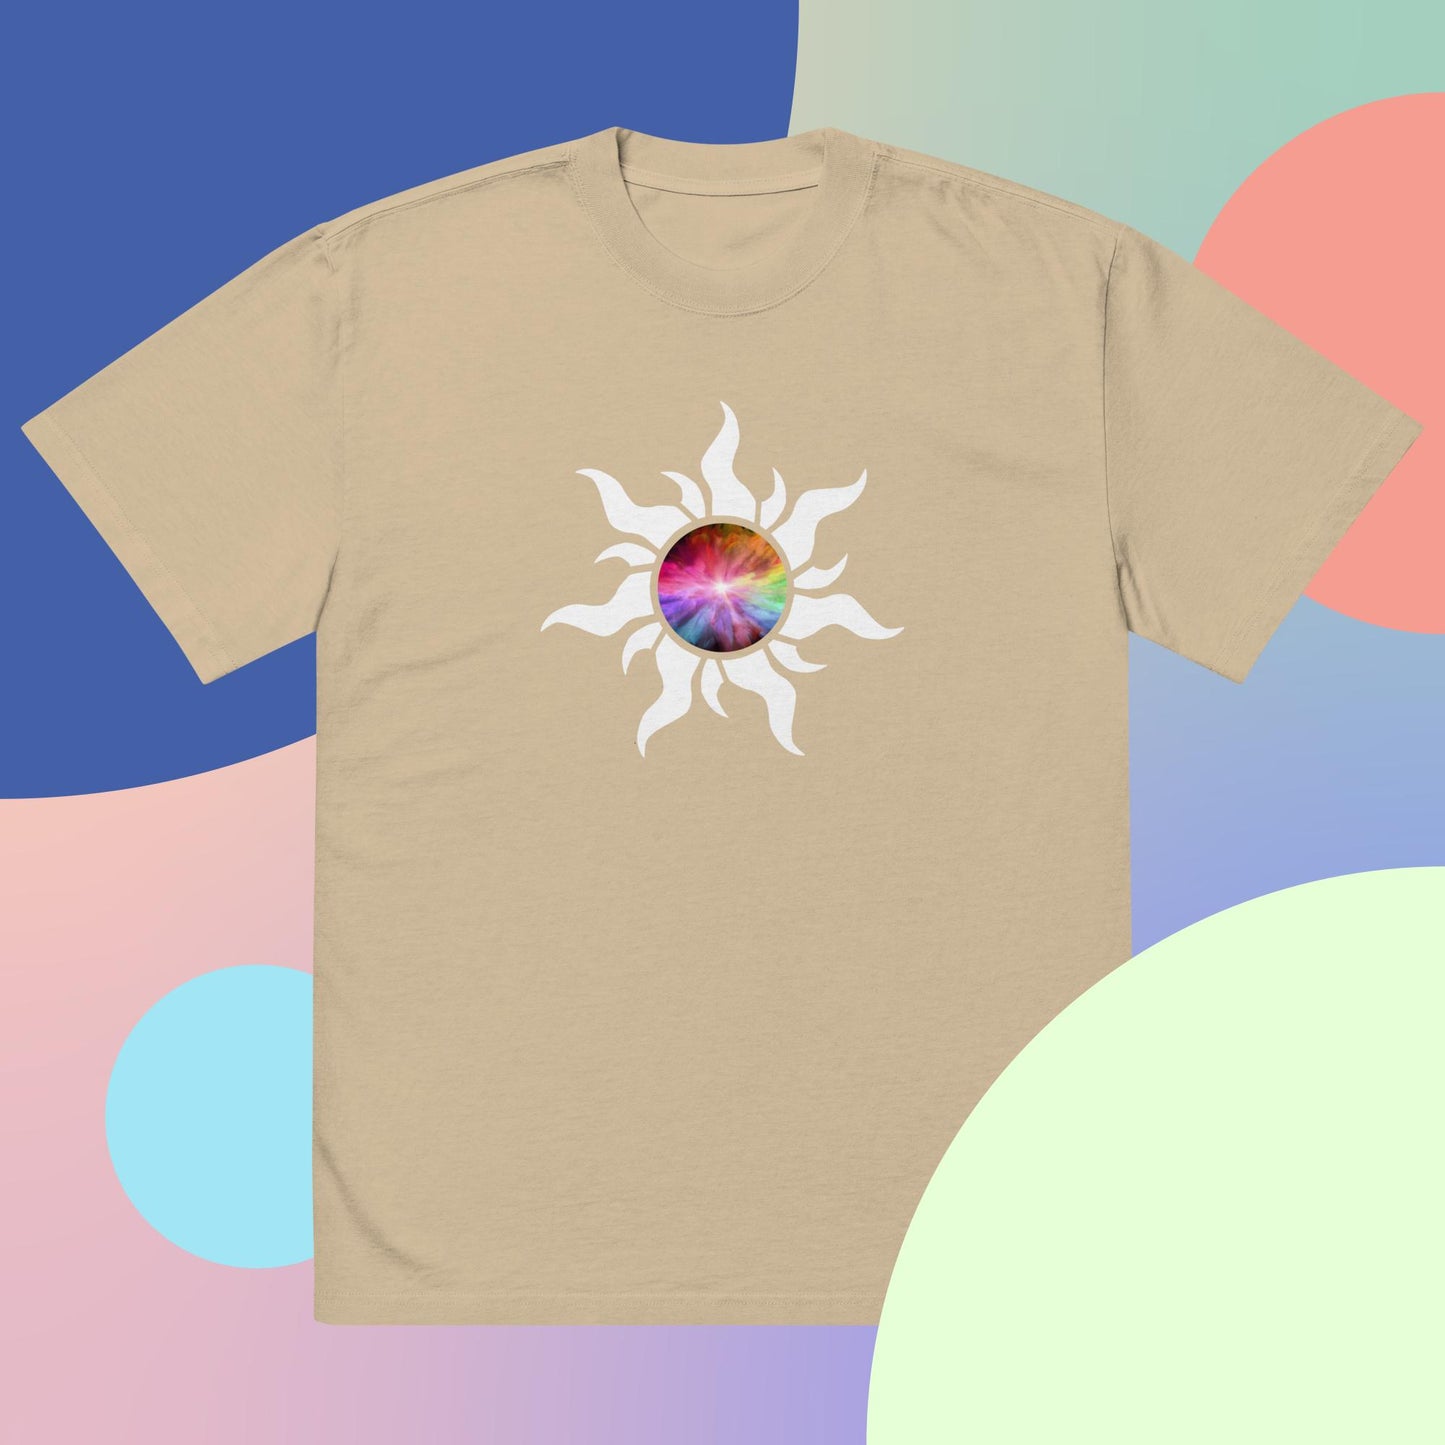 nexus sun t-shirt